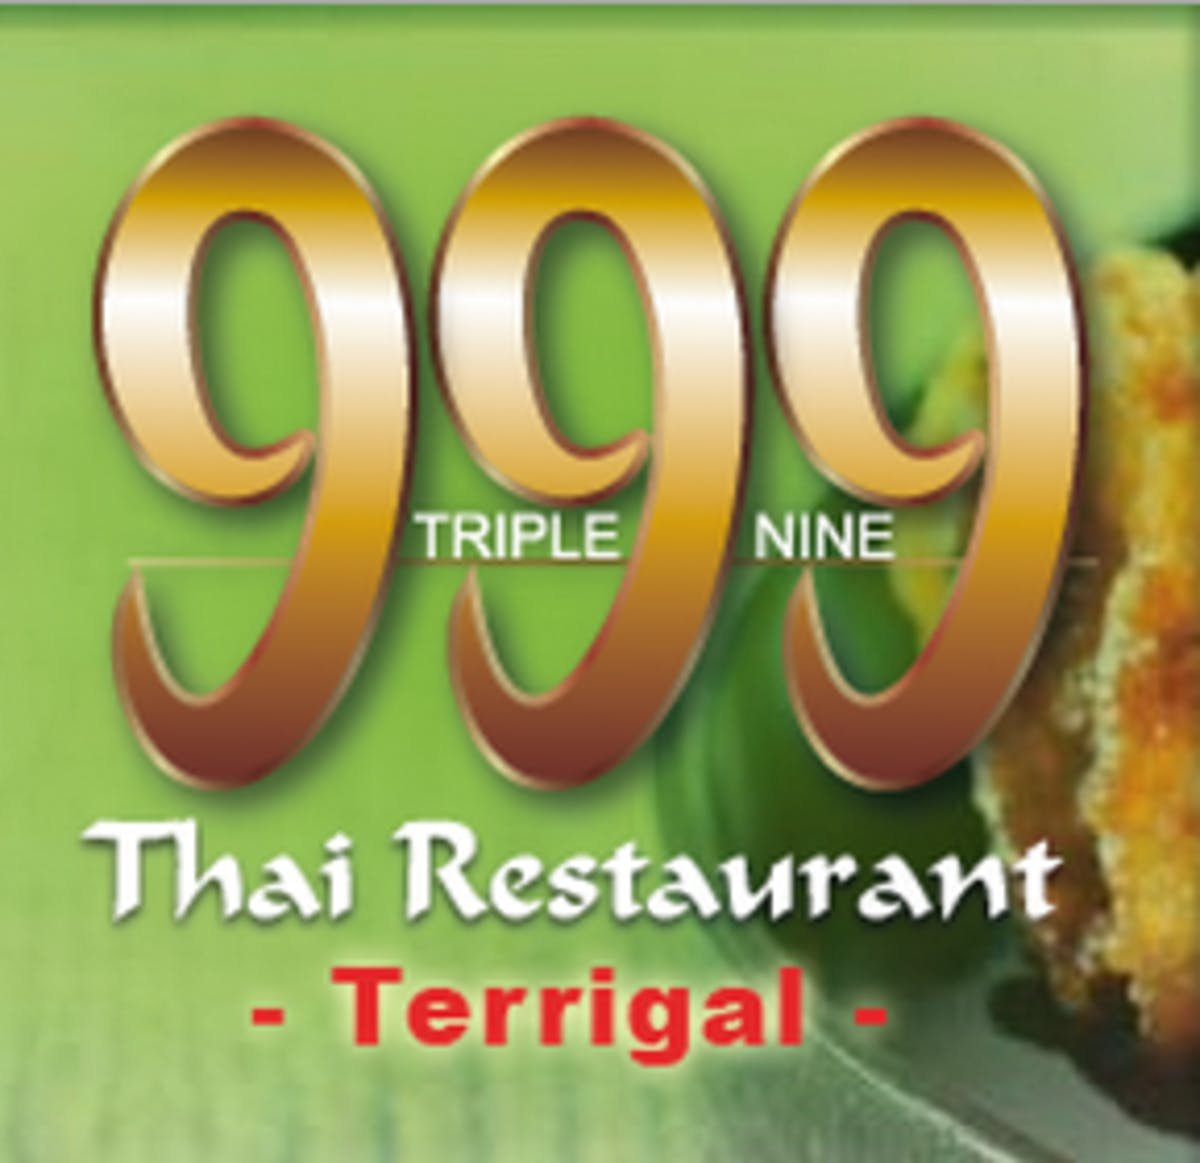 999 Thai Restaurant - Food Delivery Shop